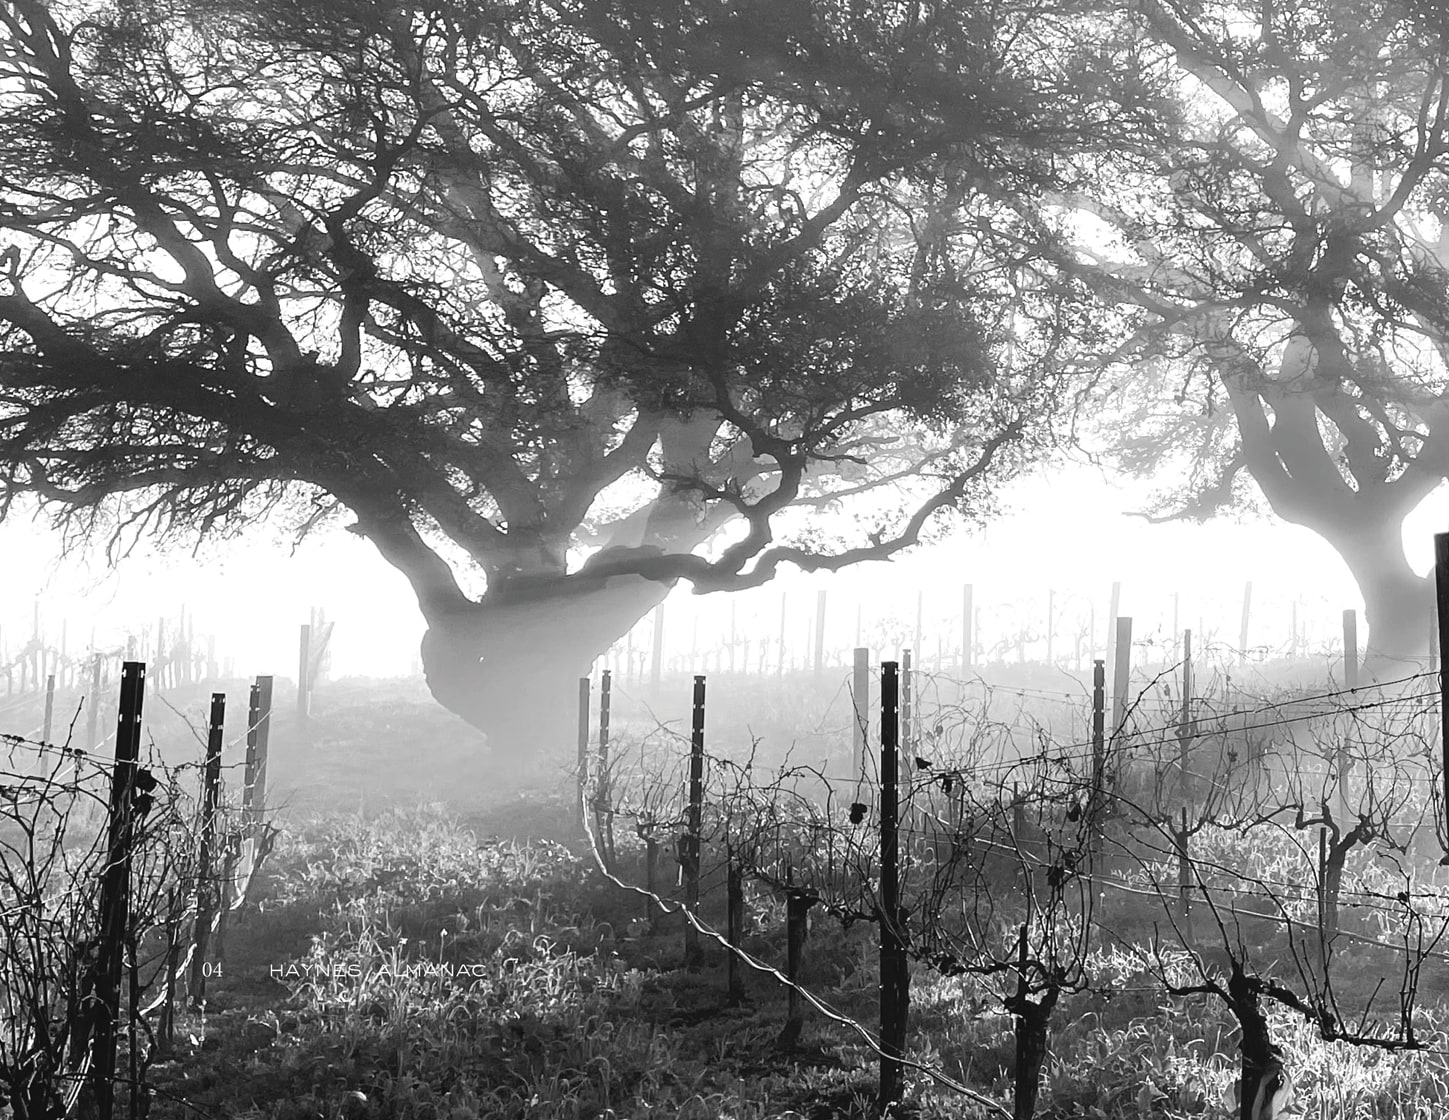 Vineyard seen through fog